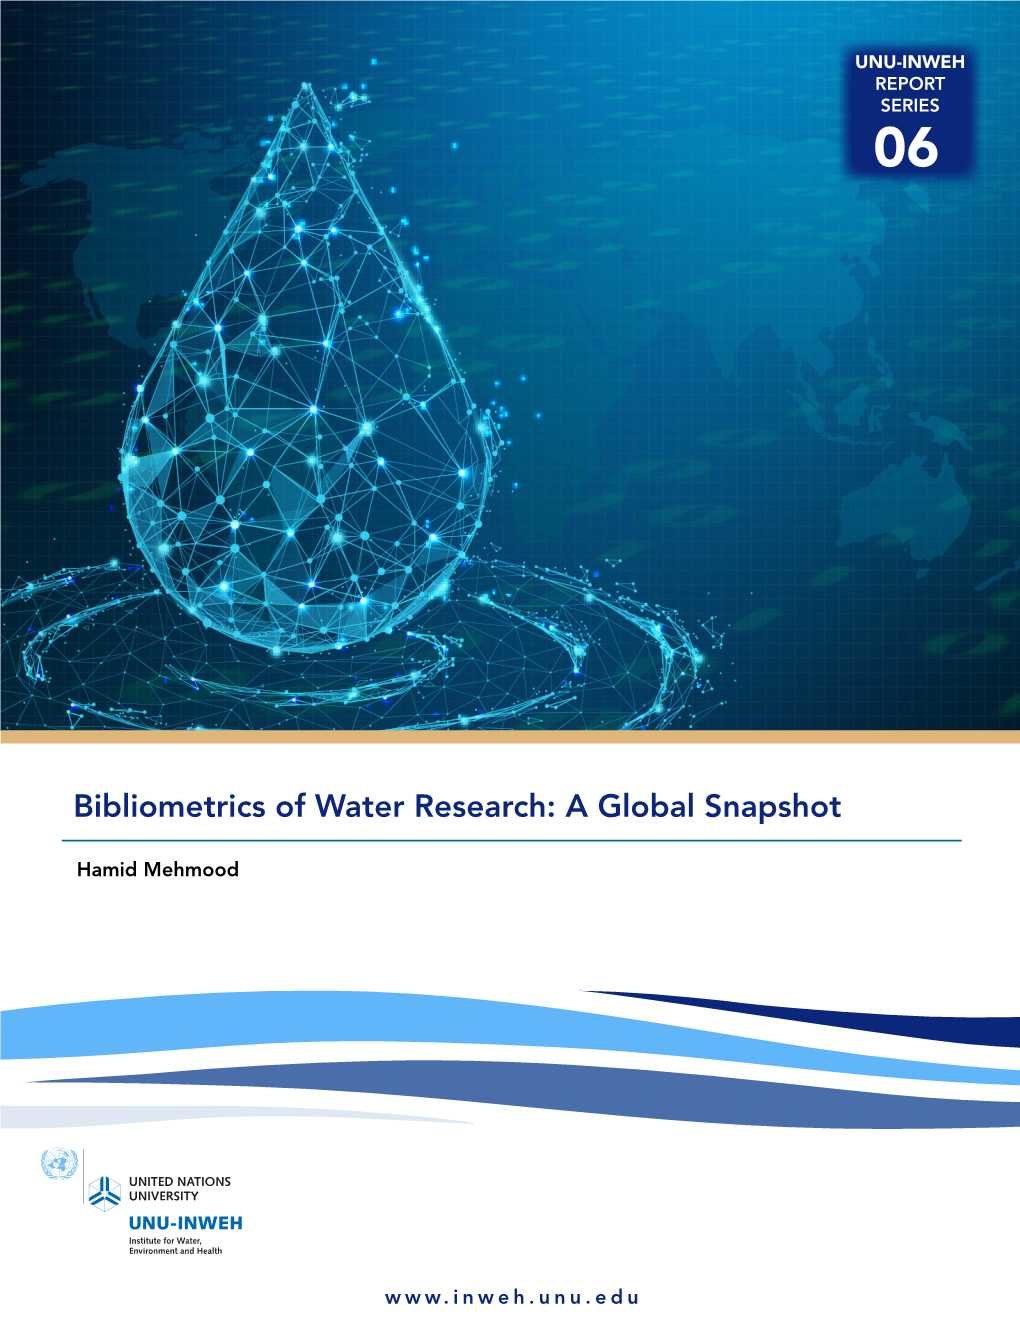 Bibliometrics of Water Research: a Global Snapshot